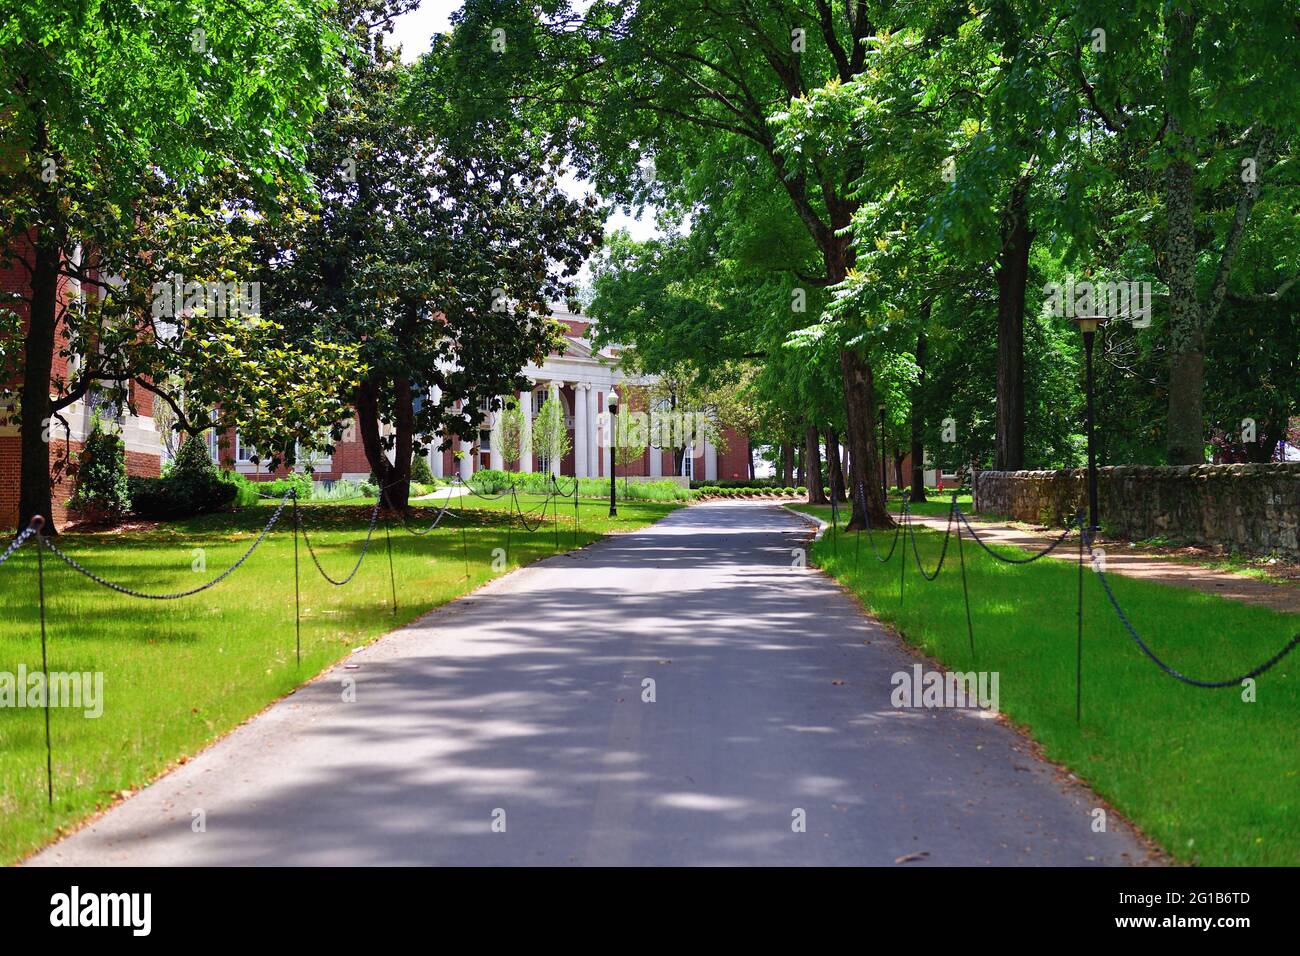 Nashville, Tennessee, USA. Magnolia Circle leading to academic buildings on the campus of Vanderbilt University. Stock Photo